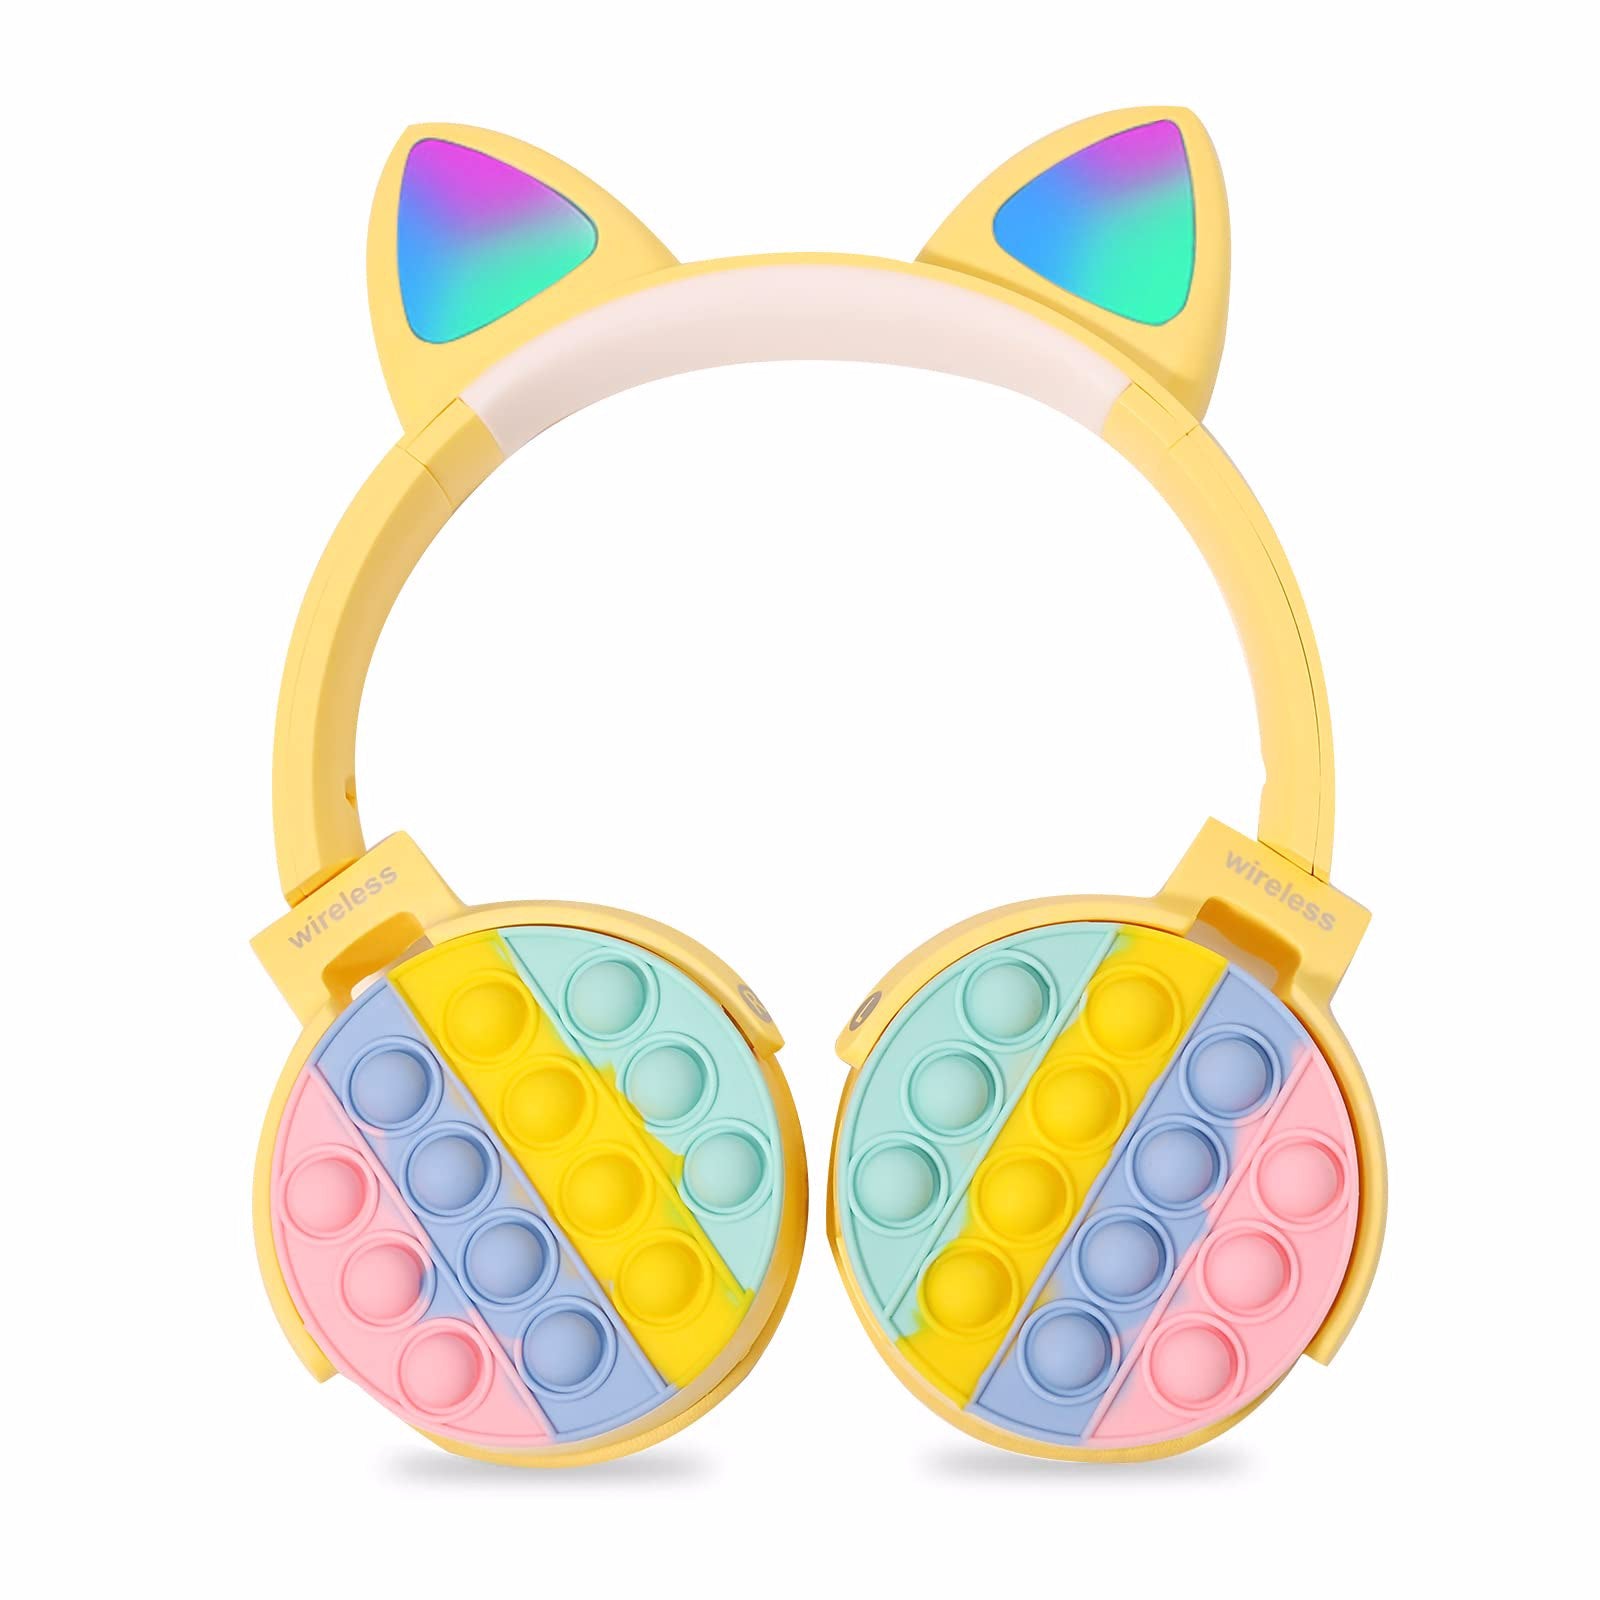 Kids Toy Headset, Wireless Bluetooth Headphone Pop Bubble On-Ear Headphone Fidget Toy Rainbow Color Fidget Headset for Children Adults (Blue)